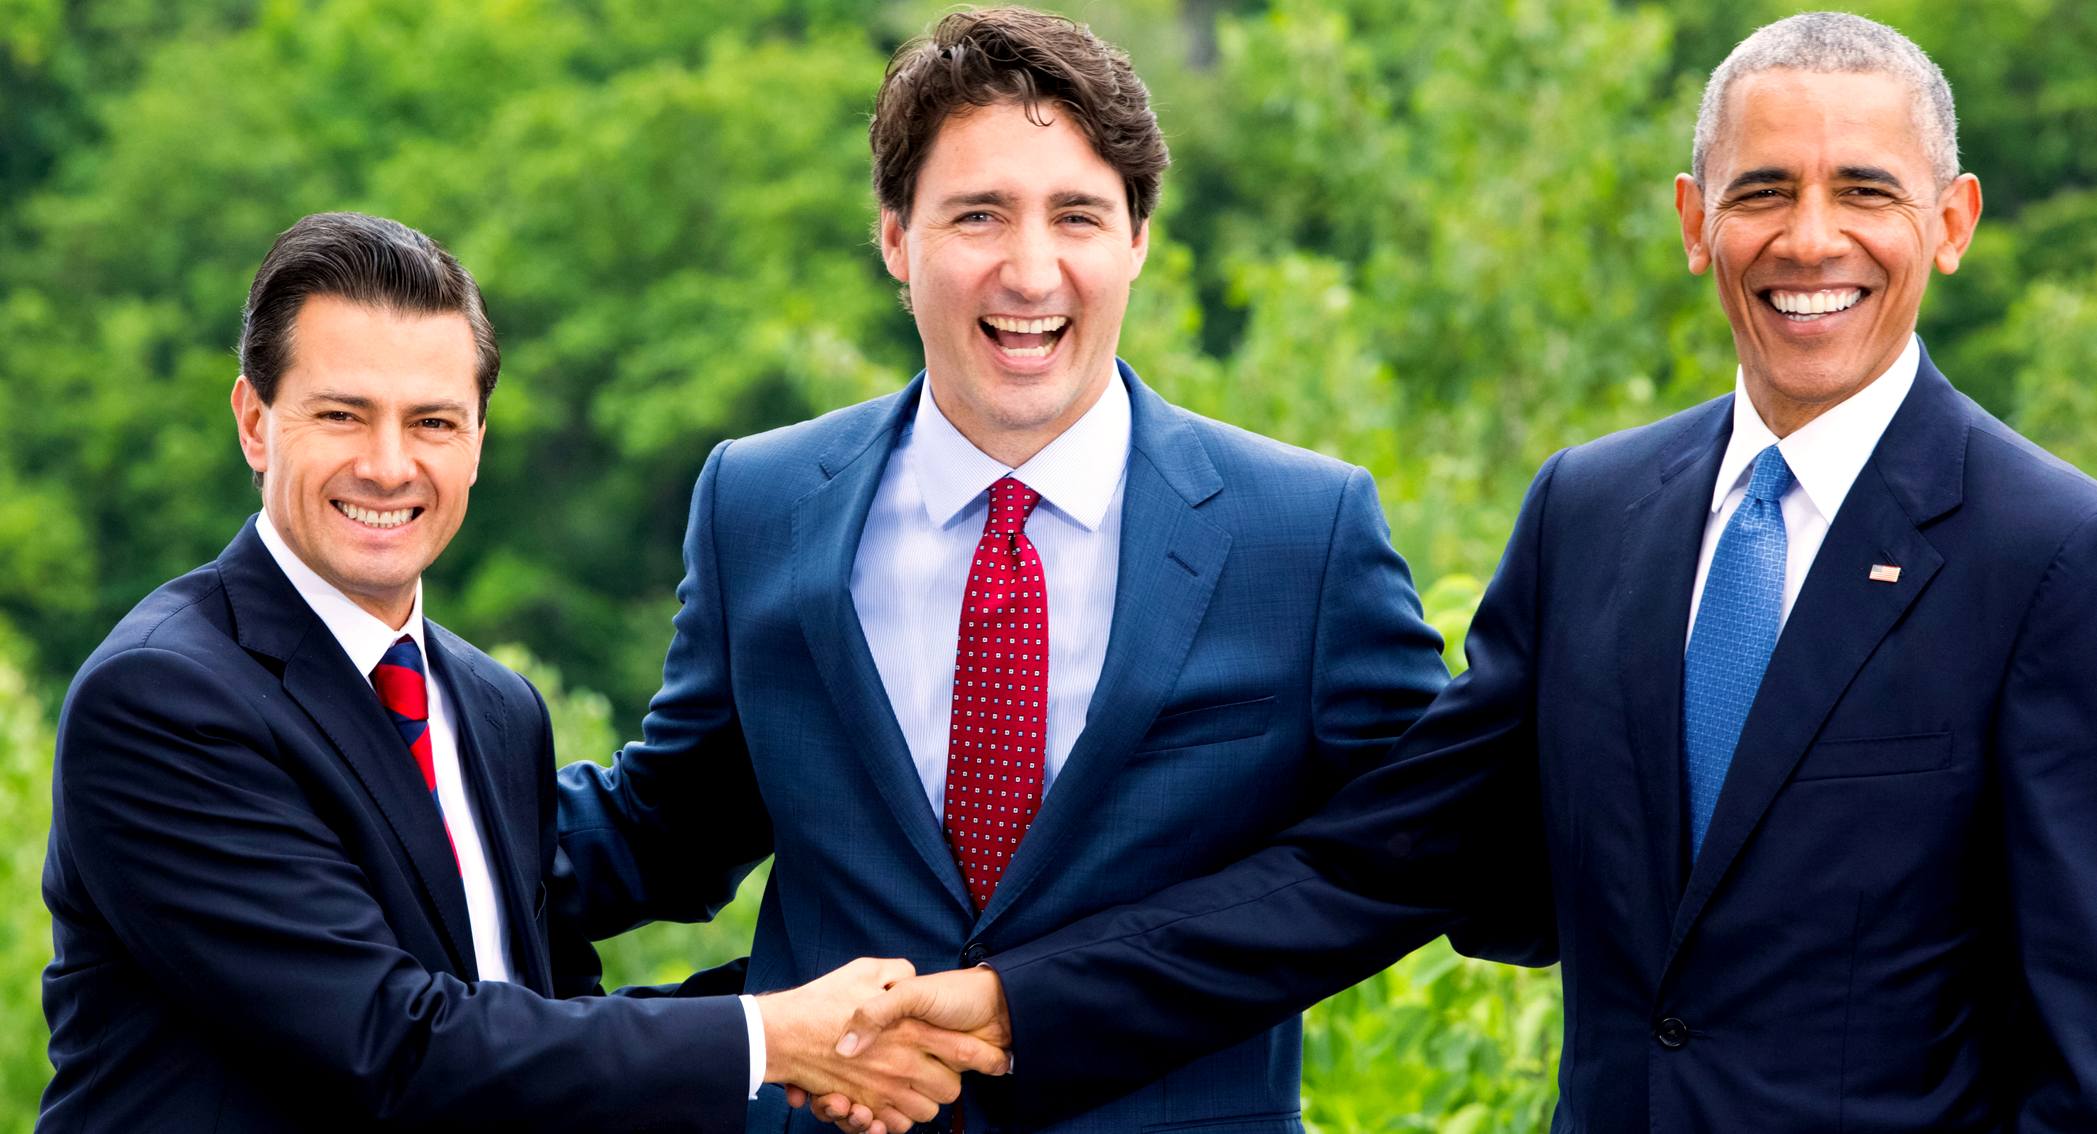 The three amigos Enrique Pena Nieto, Justin Trudeau and Barack Obama